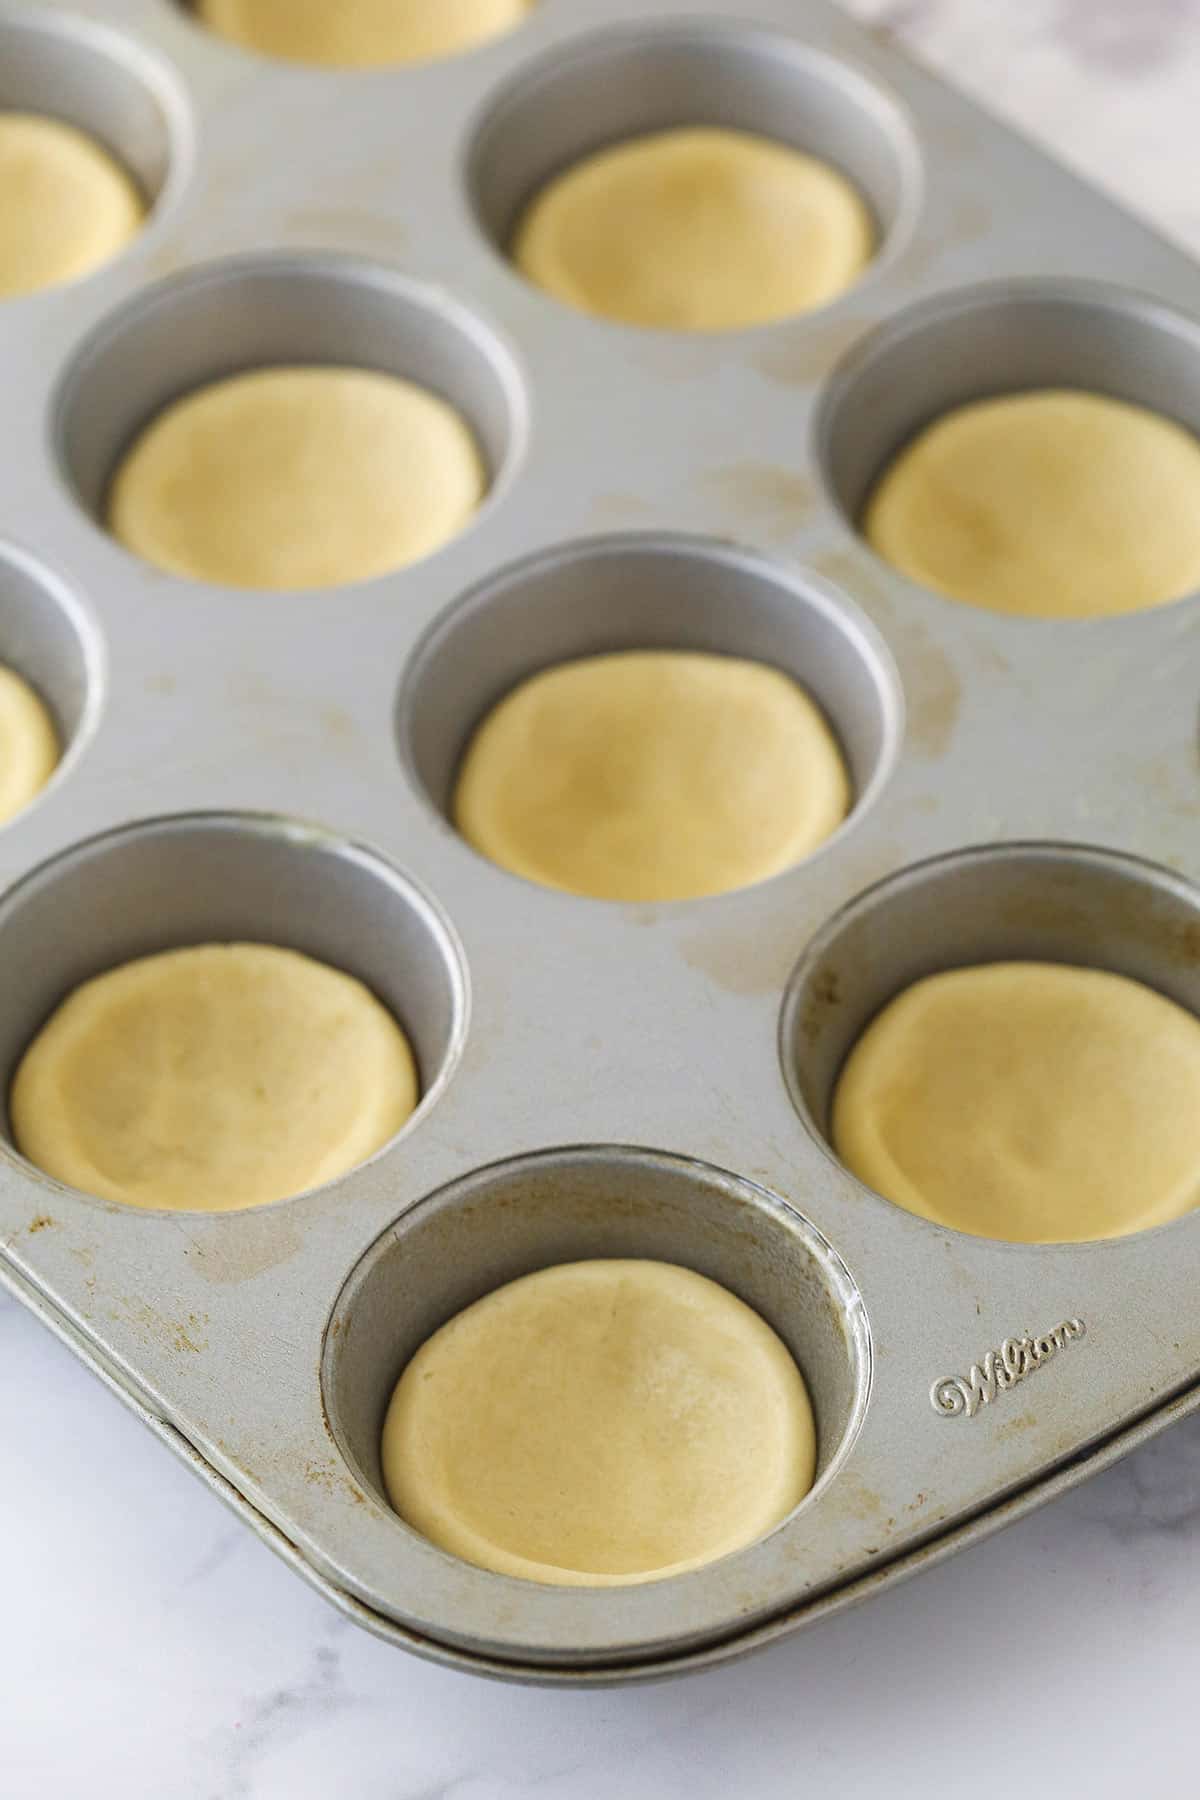 Sugar cookie dough pressed into cupcake tins ready to bake.